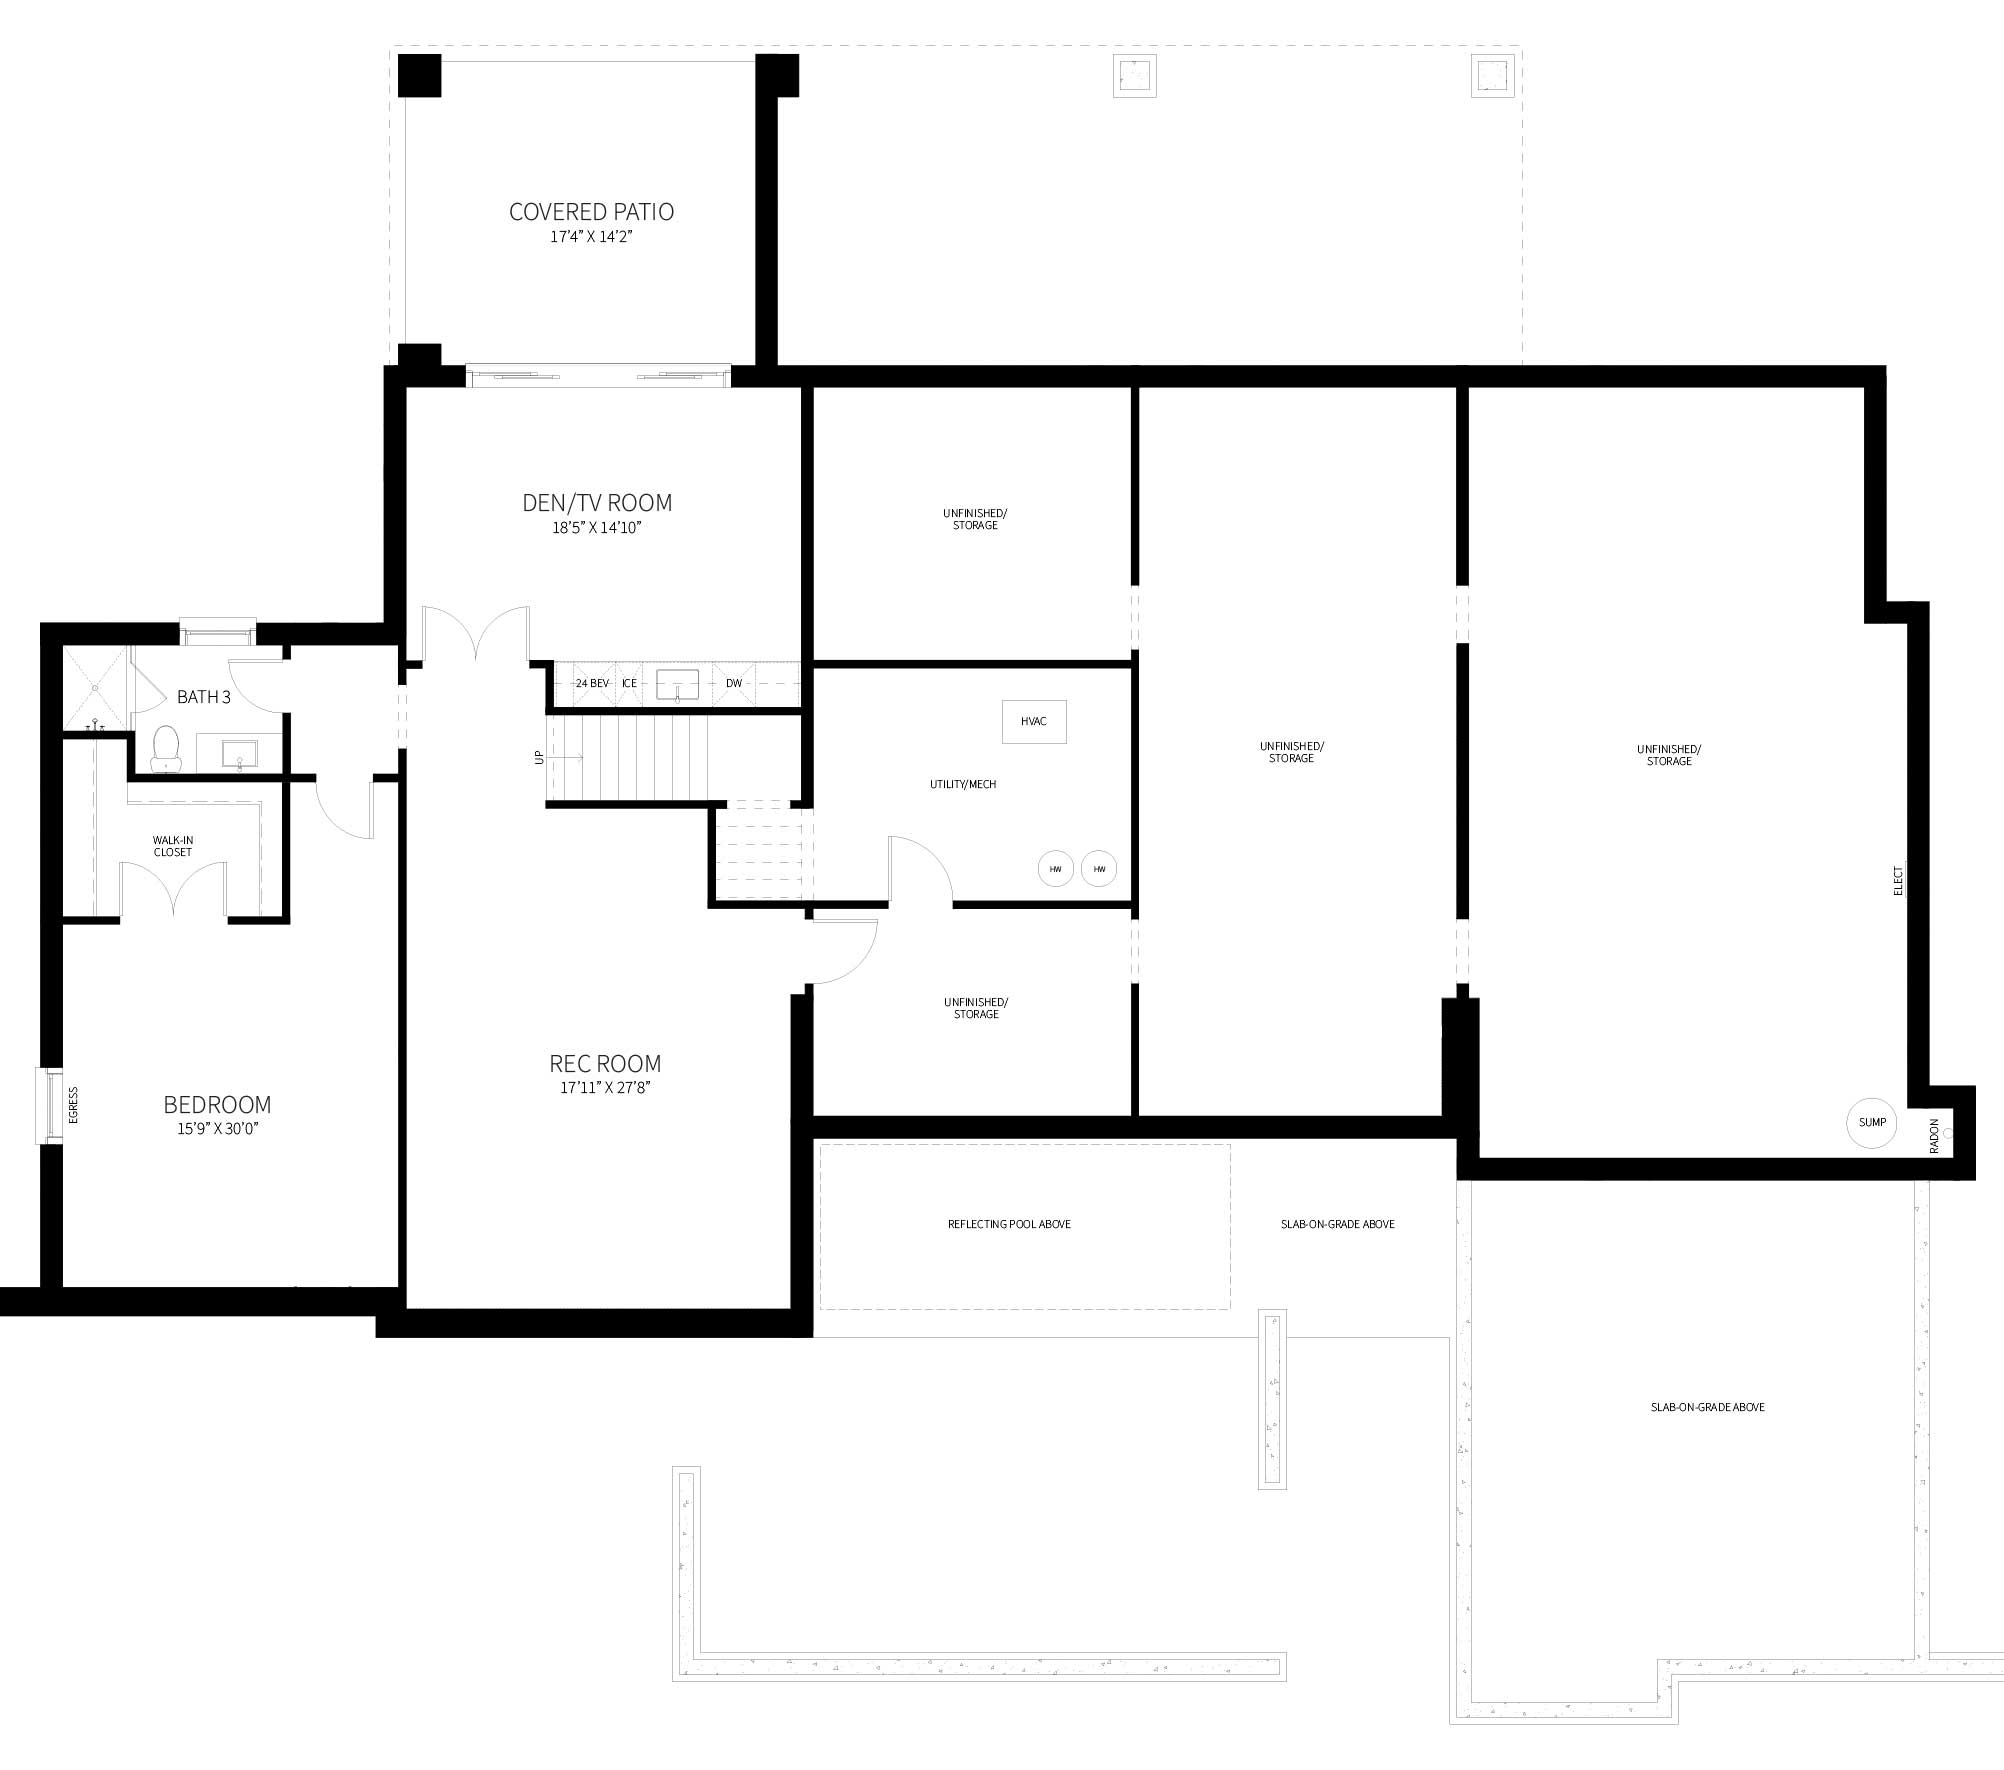 The Basement floor plan of a California Modern inspired custom home.